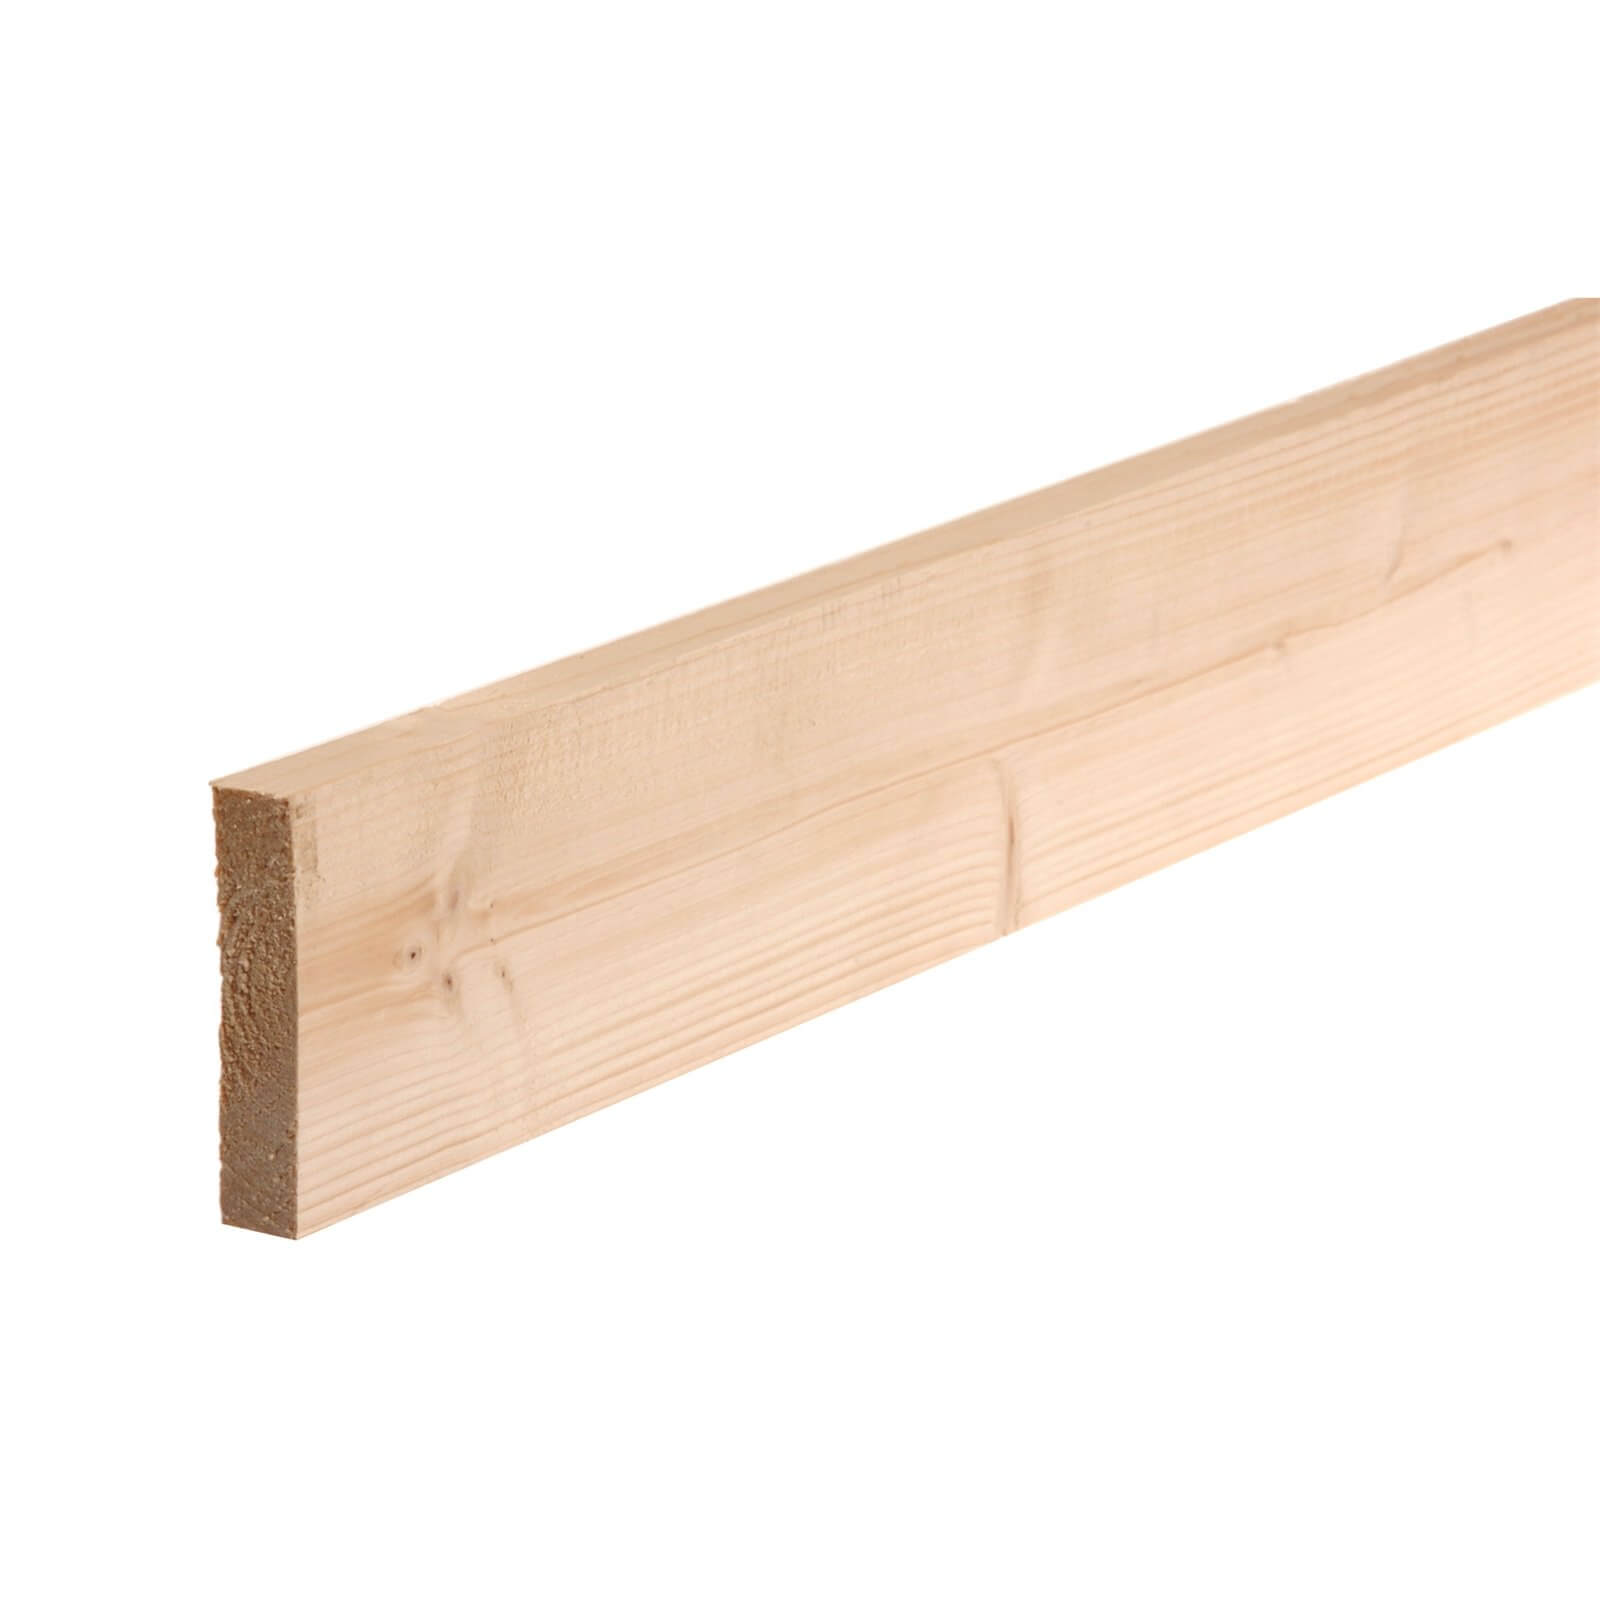 Metsa Planed Square Edge Softwood Timber - 2.4m (18 x 70 x 2400mm)